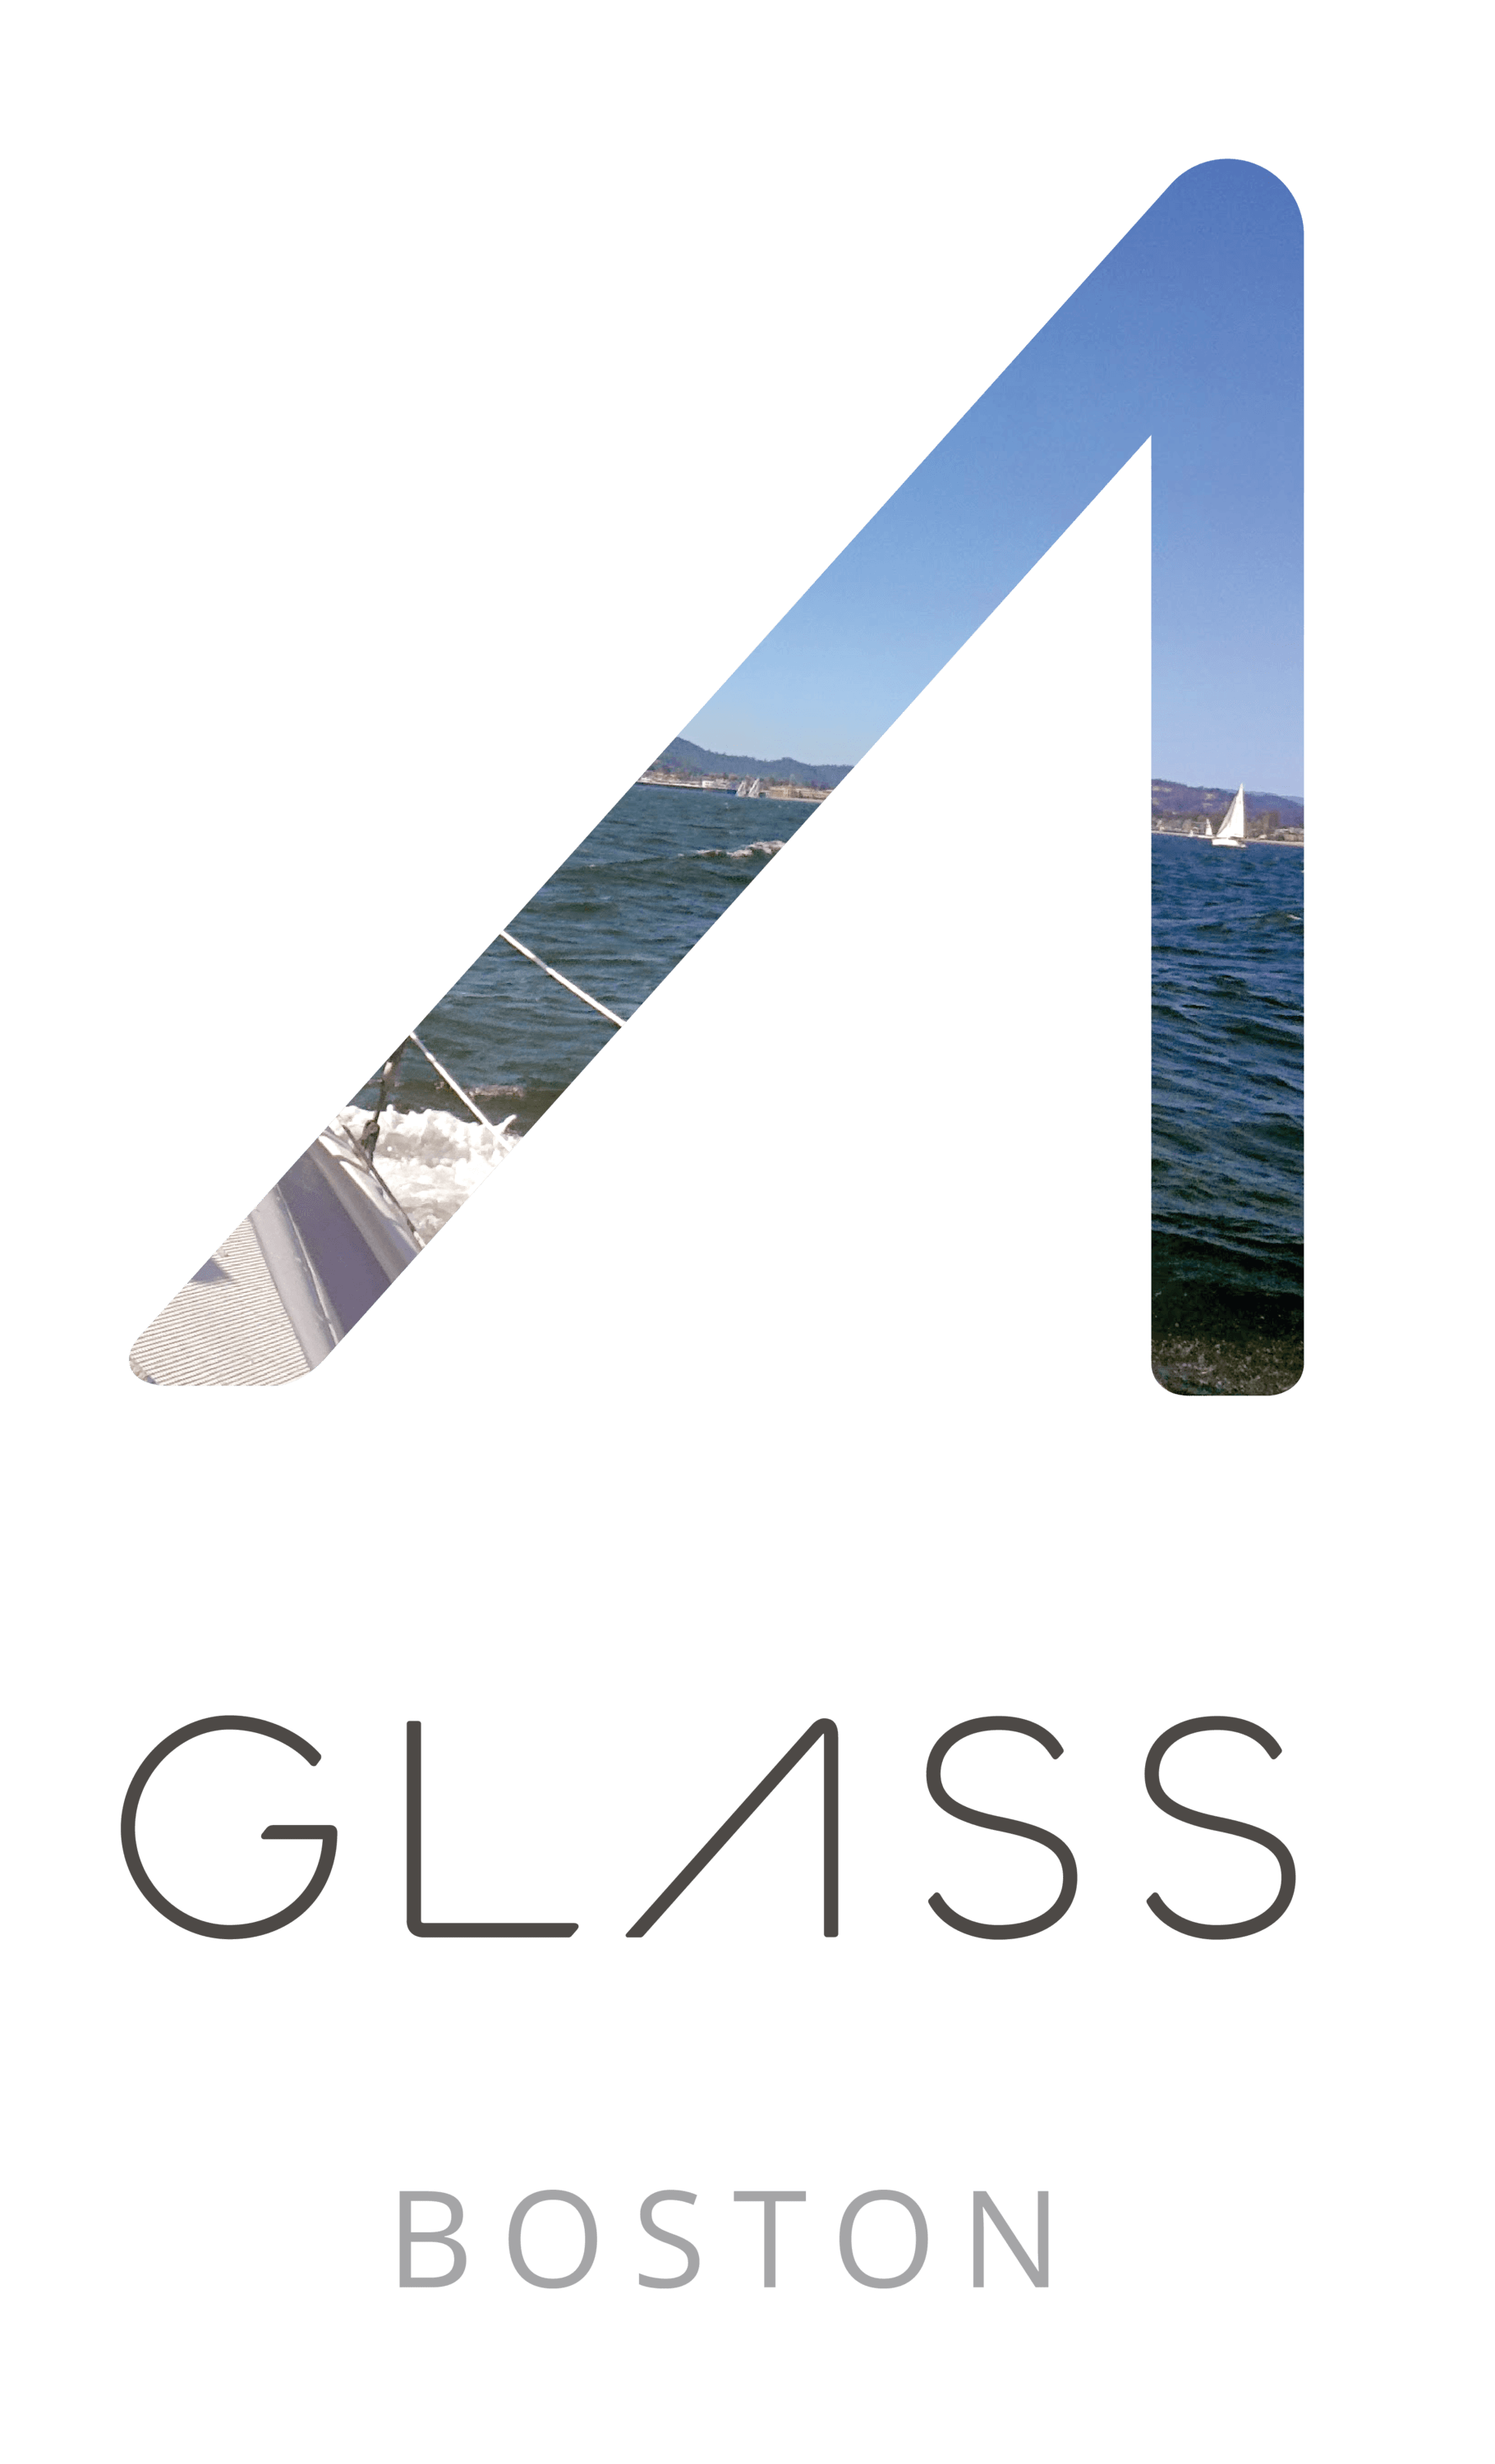 Google Glass Logo - Google Glass US tour swings by Boston, MA on July 26th – RSVP now